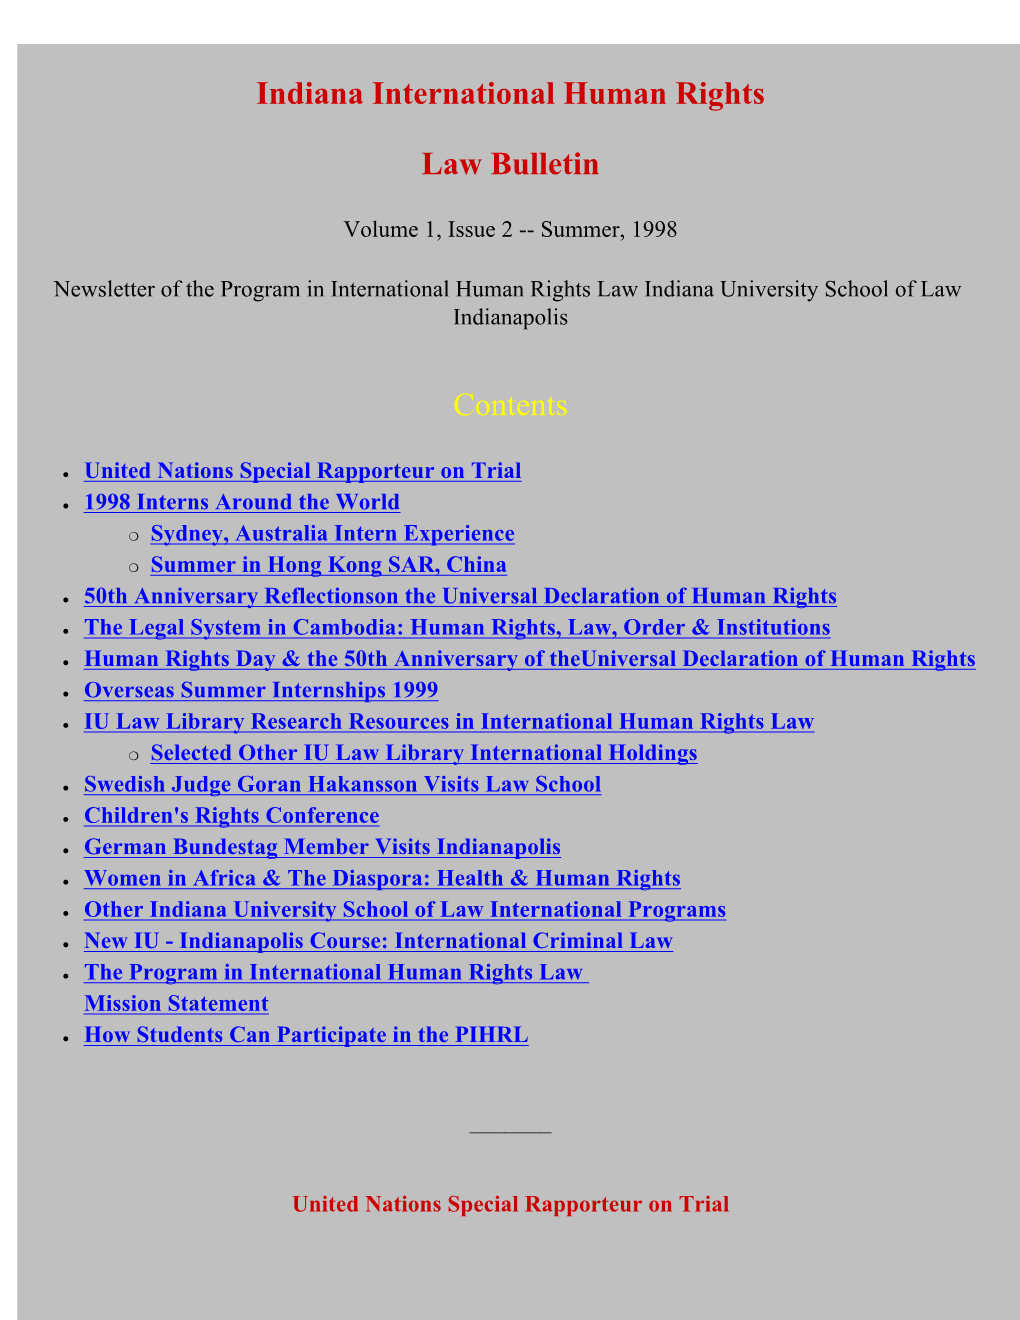 Lawbullindiana International Human Rights Law Bulletin